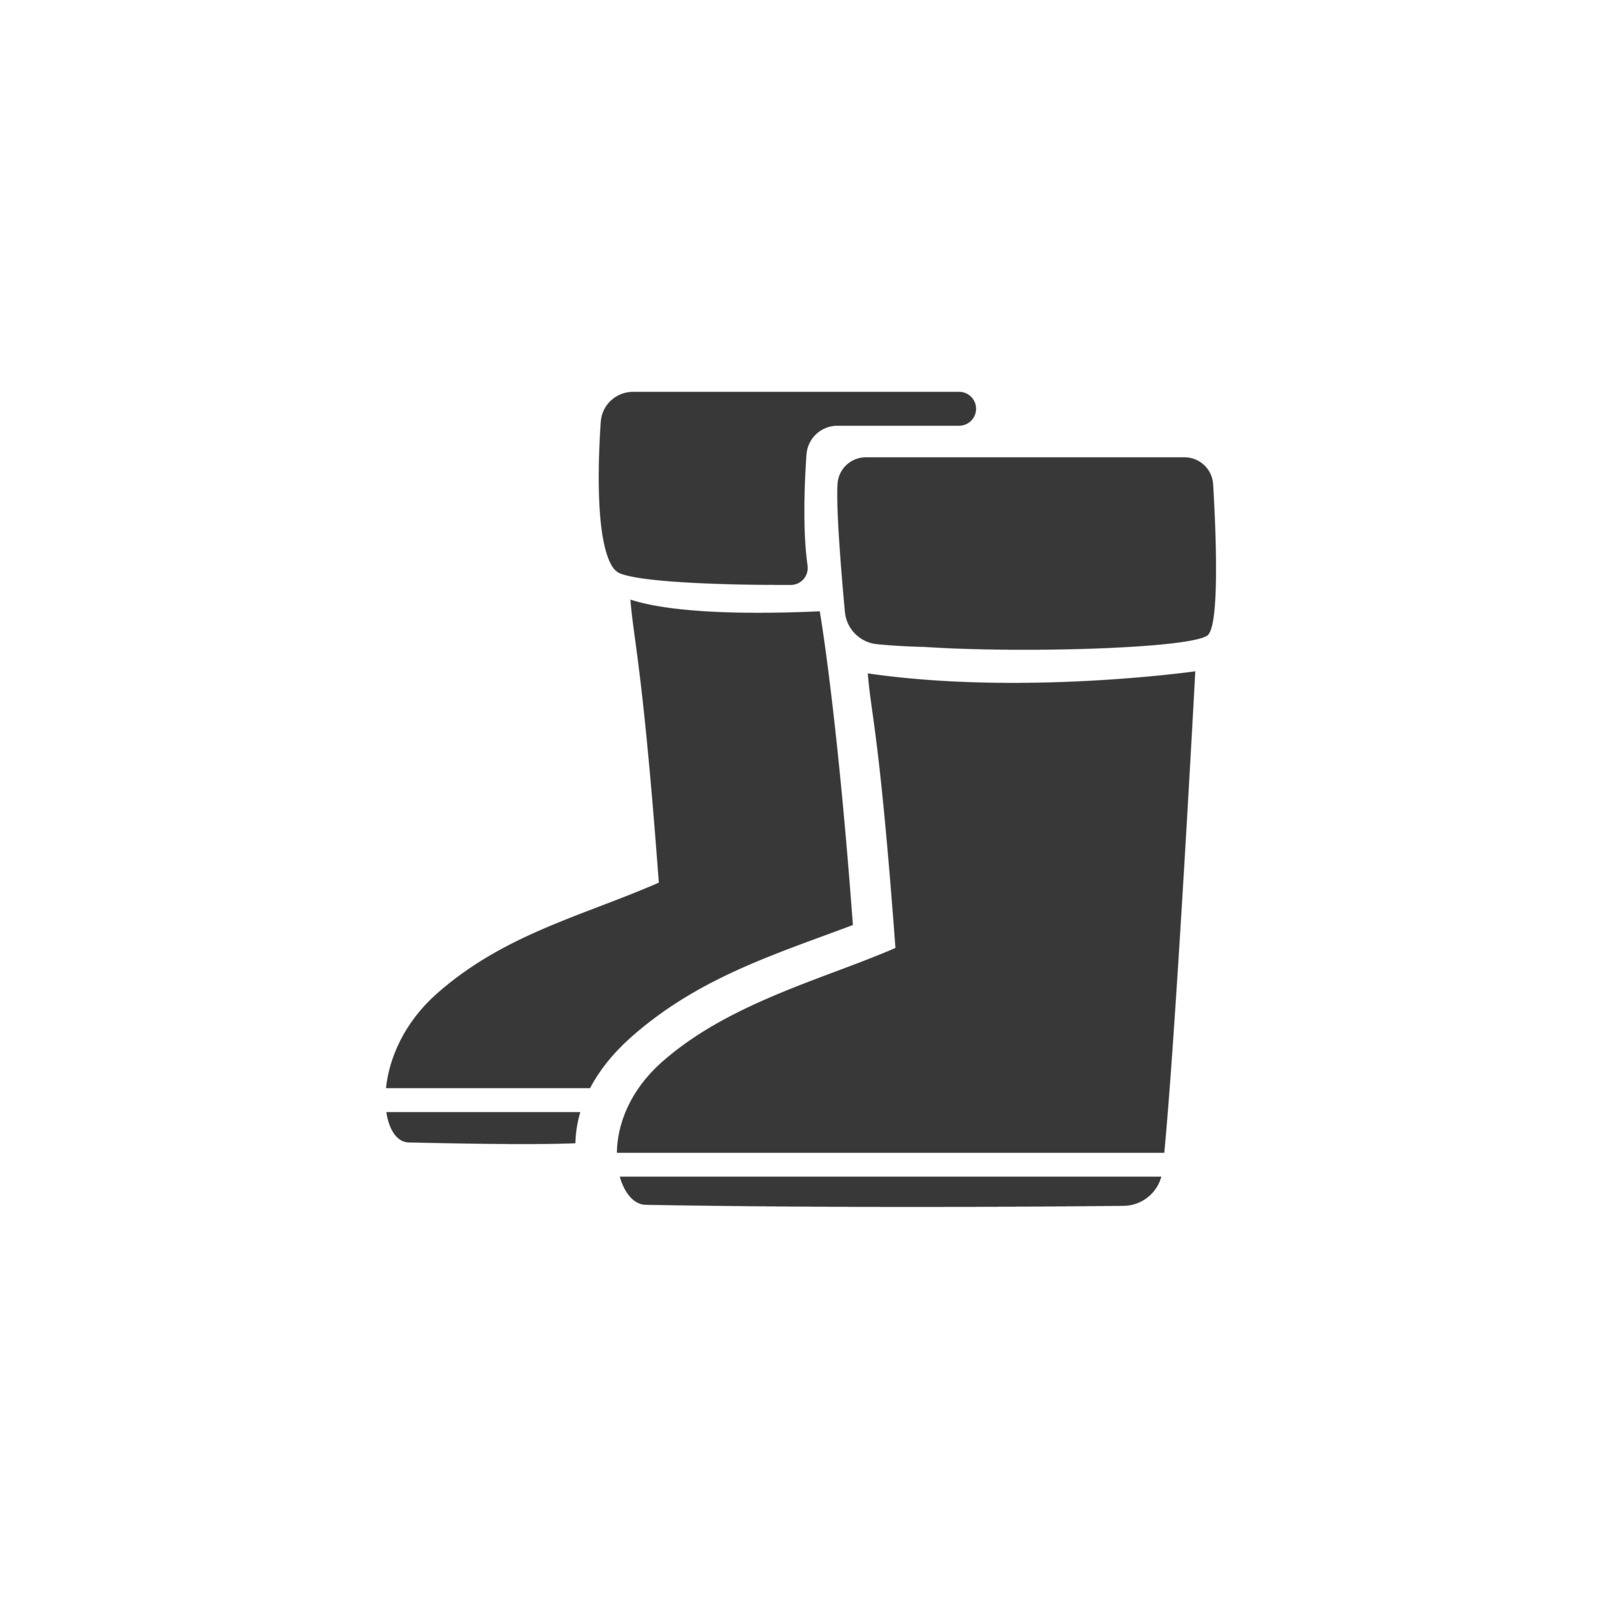 Rain boots. Isolated icon. Winter footwear flat vector illustration